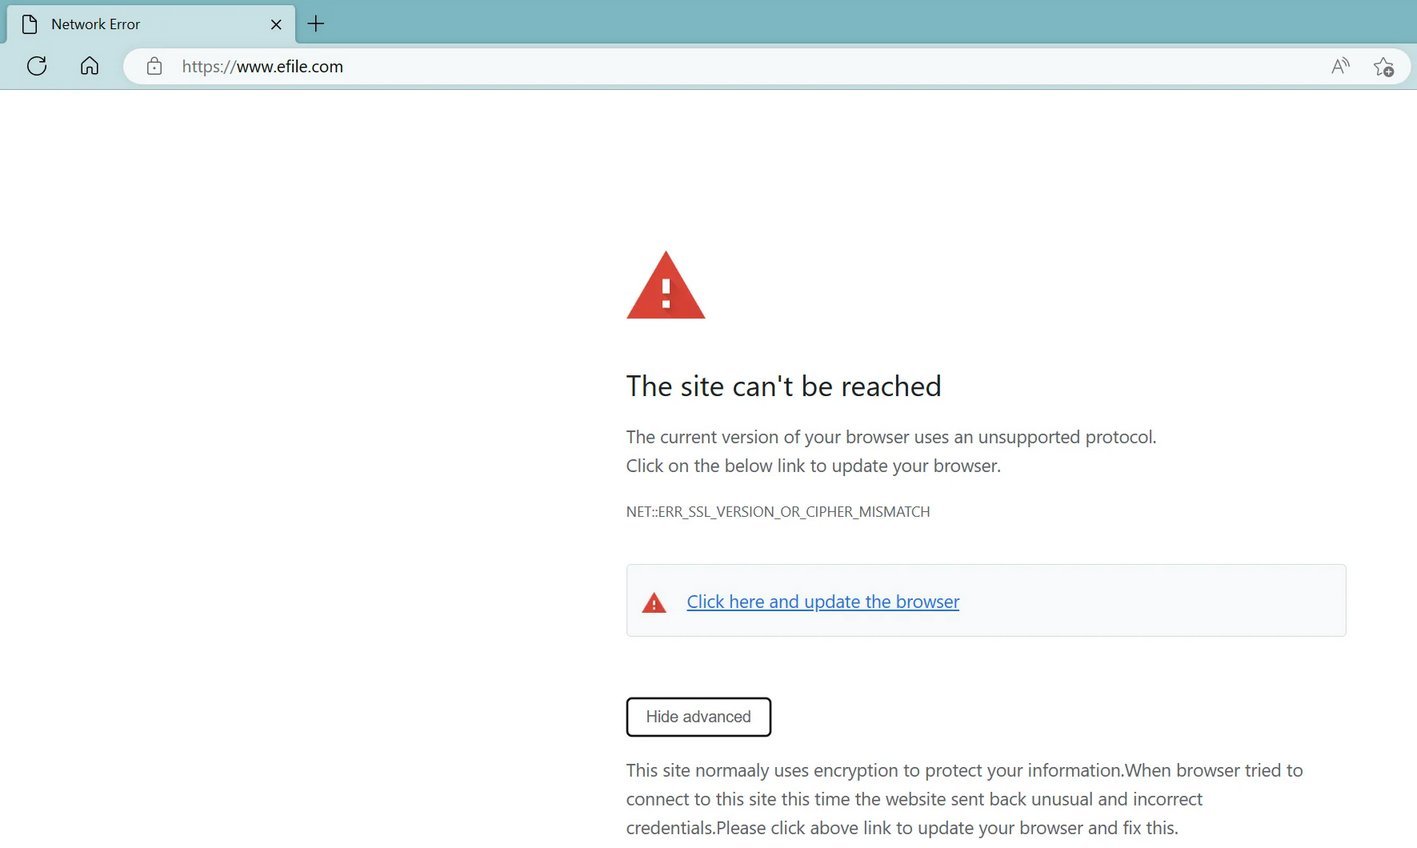 SSL error shown by eFile.com